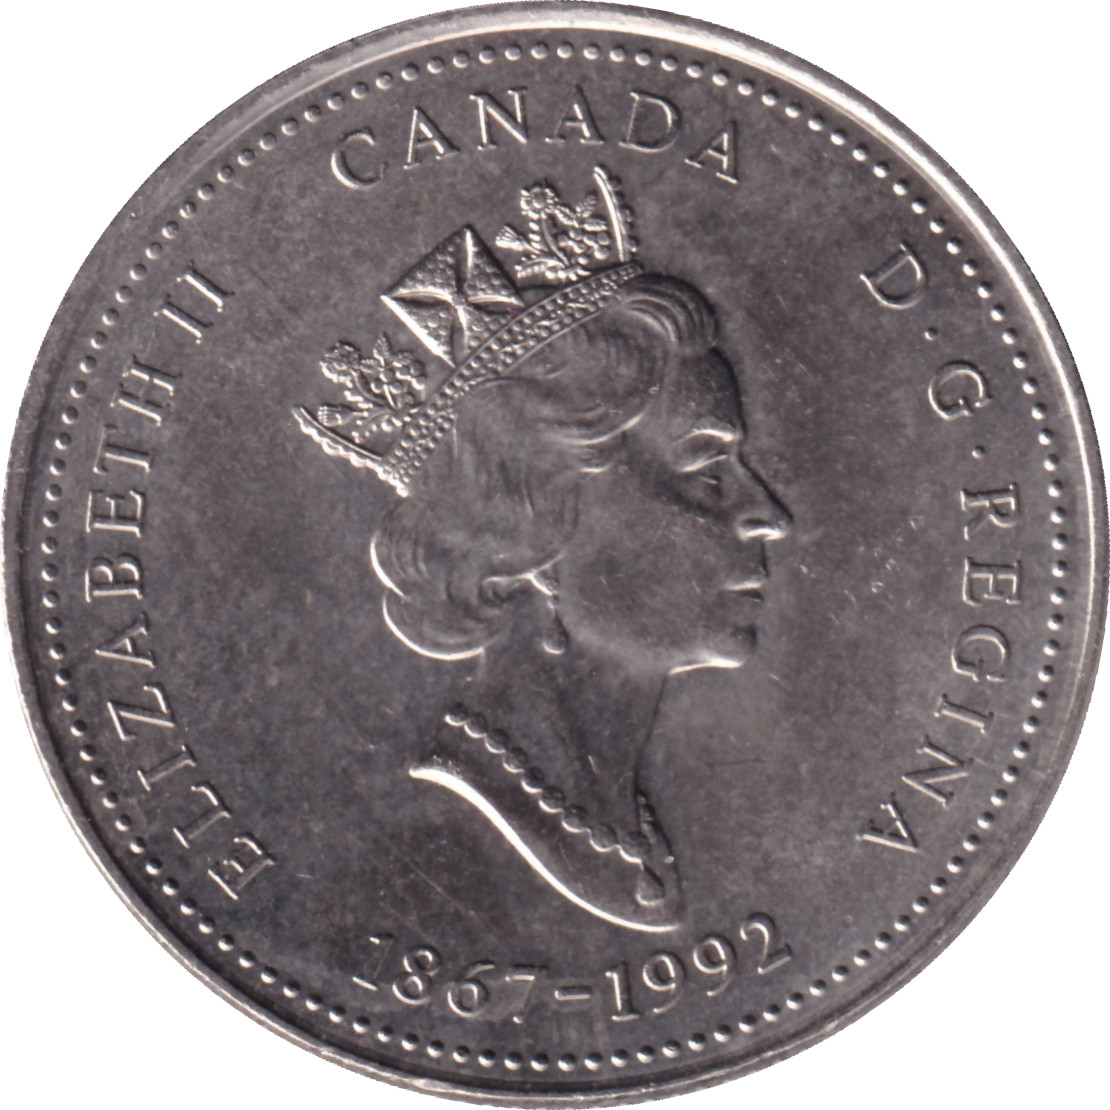 25 cents - Alberta